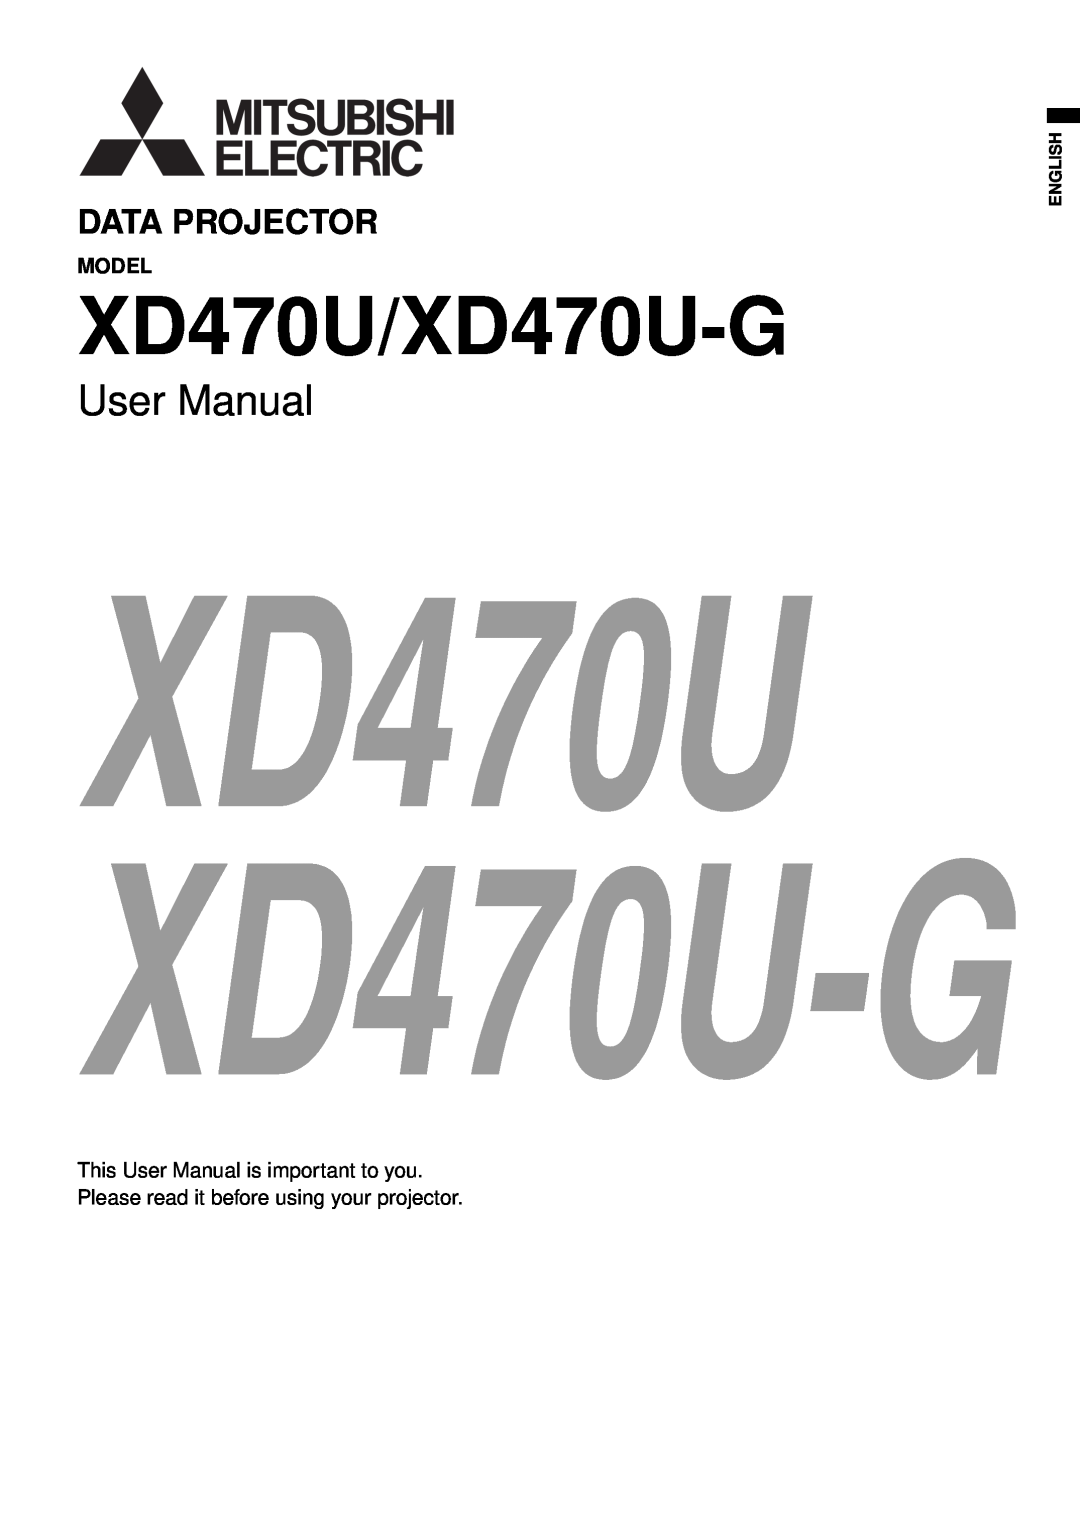 Mitsubishi Electronics user manual Model, This User Manual is important to you, English, XD470U/XD470U-G 